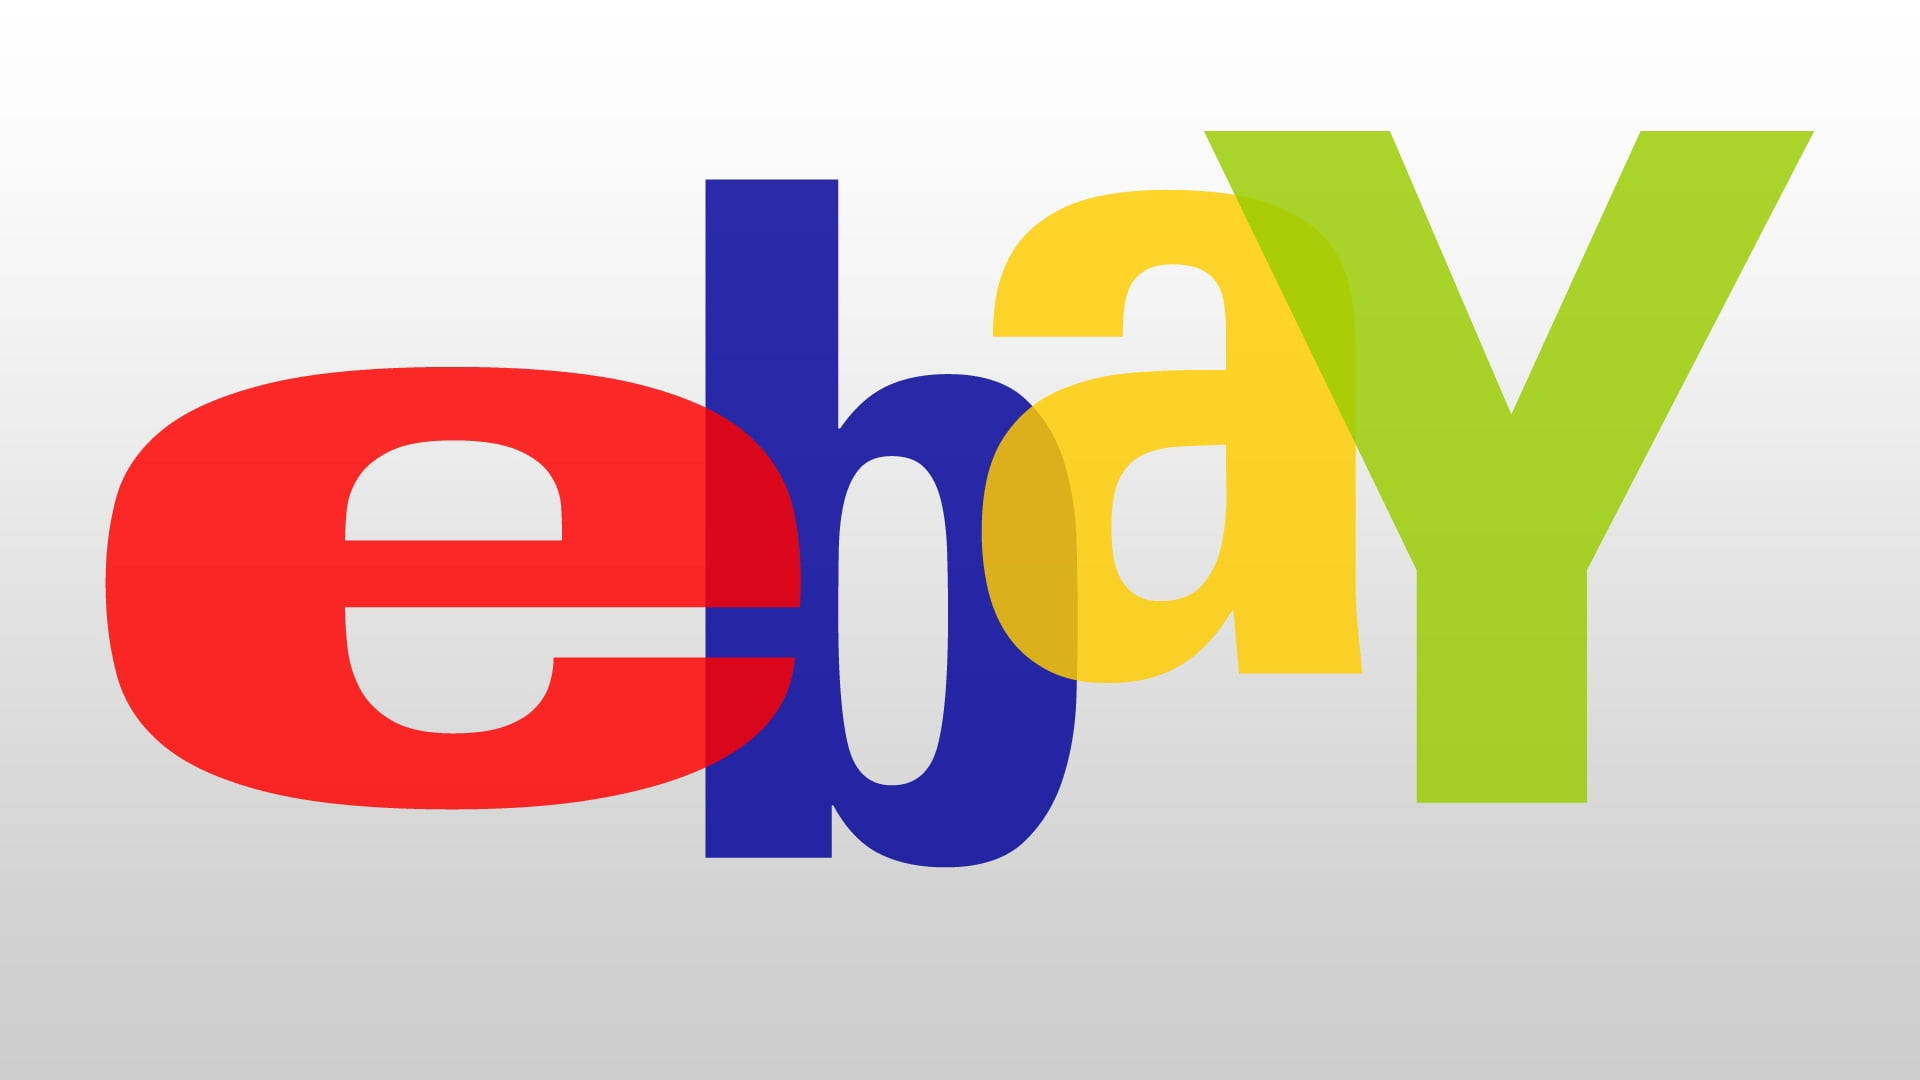 Past Logo Of Ebay Wallpaper